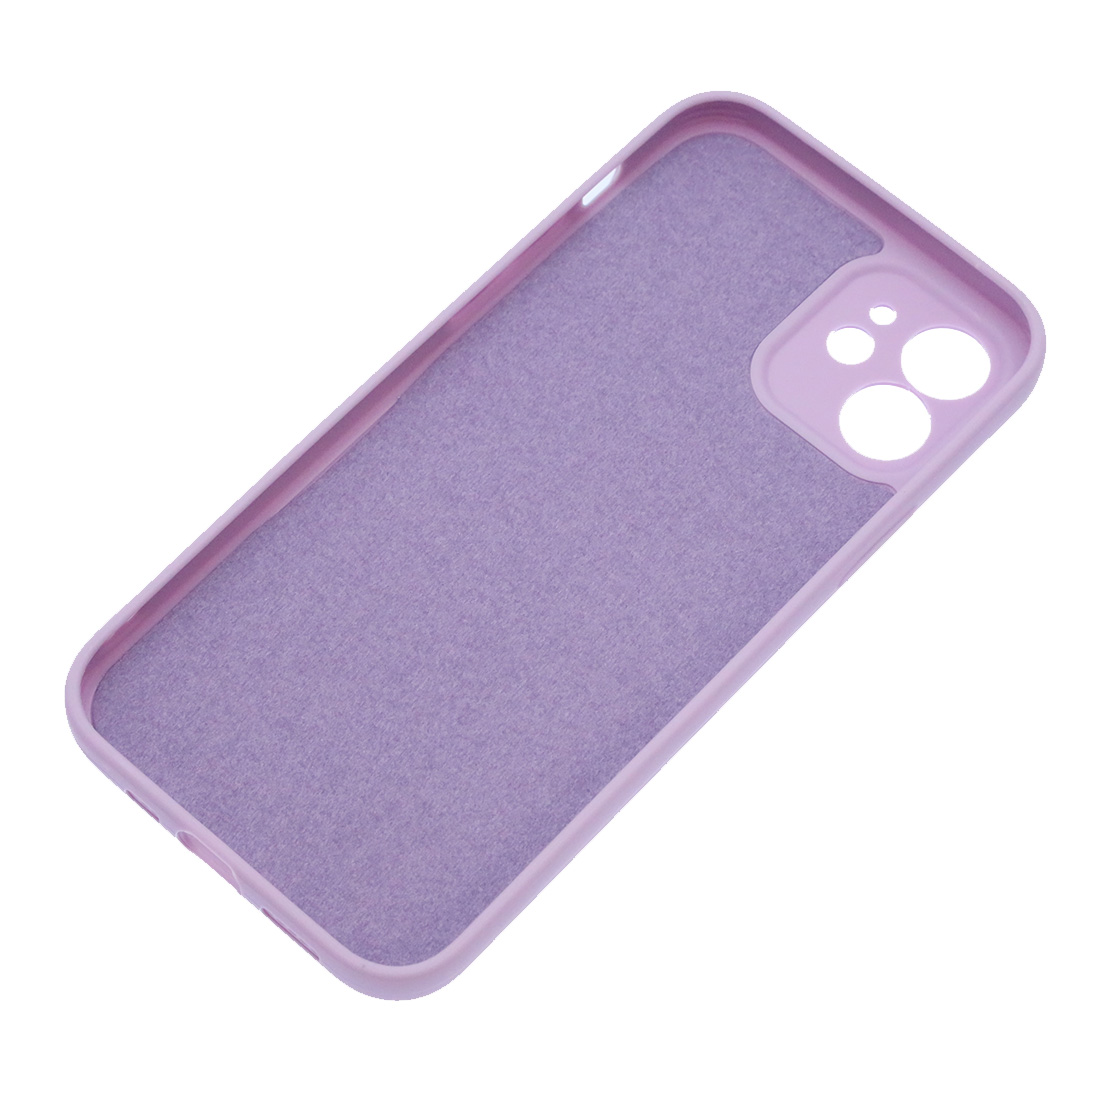 Чехол накладка для APPLE iPhone 12, силикон, бархат, цвет сиреневый